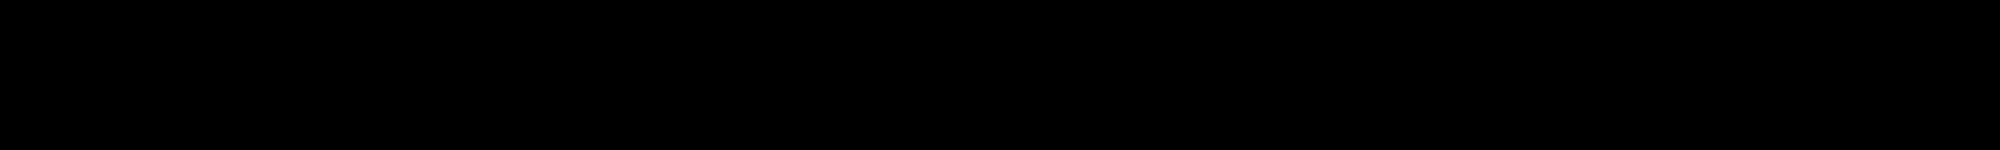 Logo 404